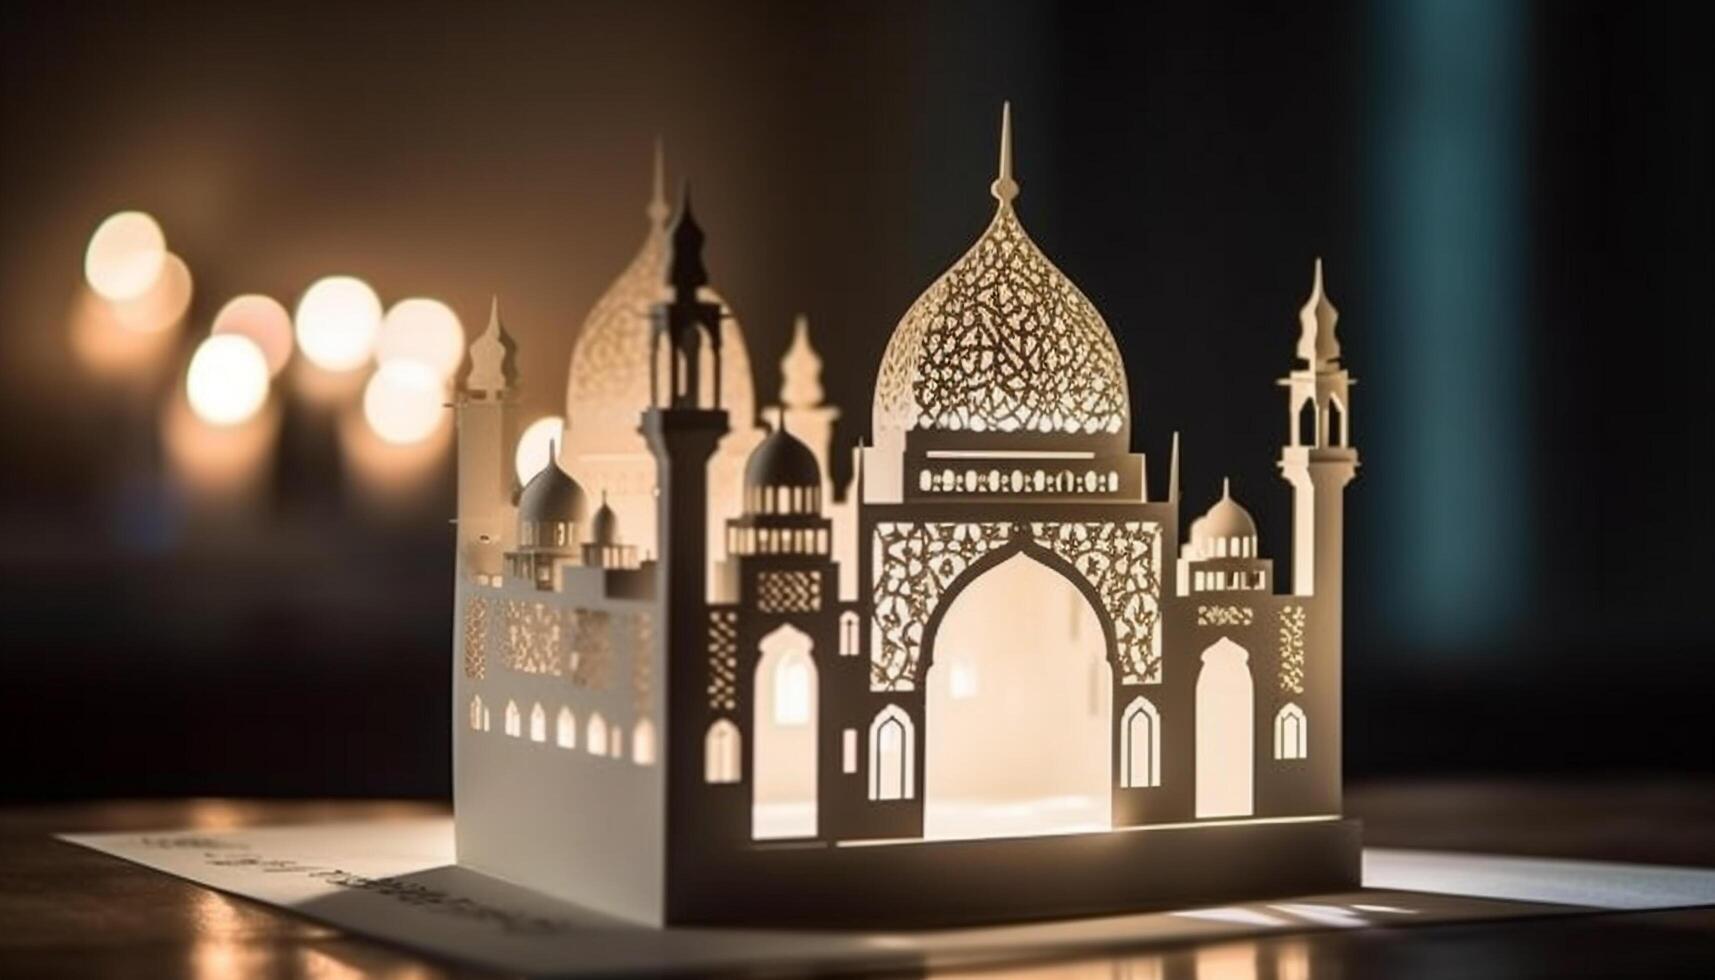 Ramadan night spirituality illuminated by minarets in Arabic style architecture generated by AI photo